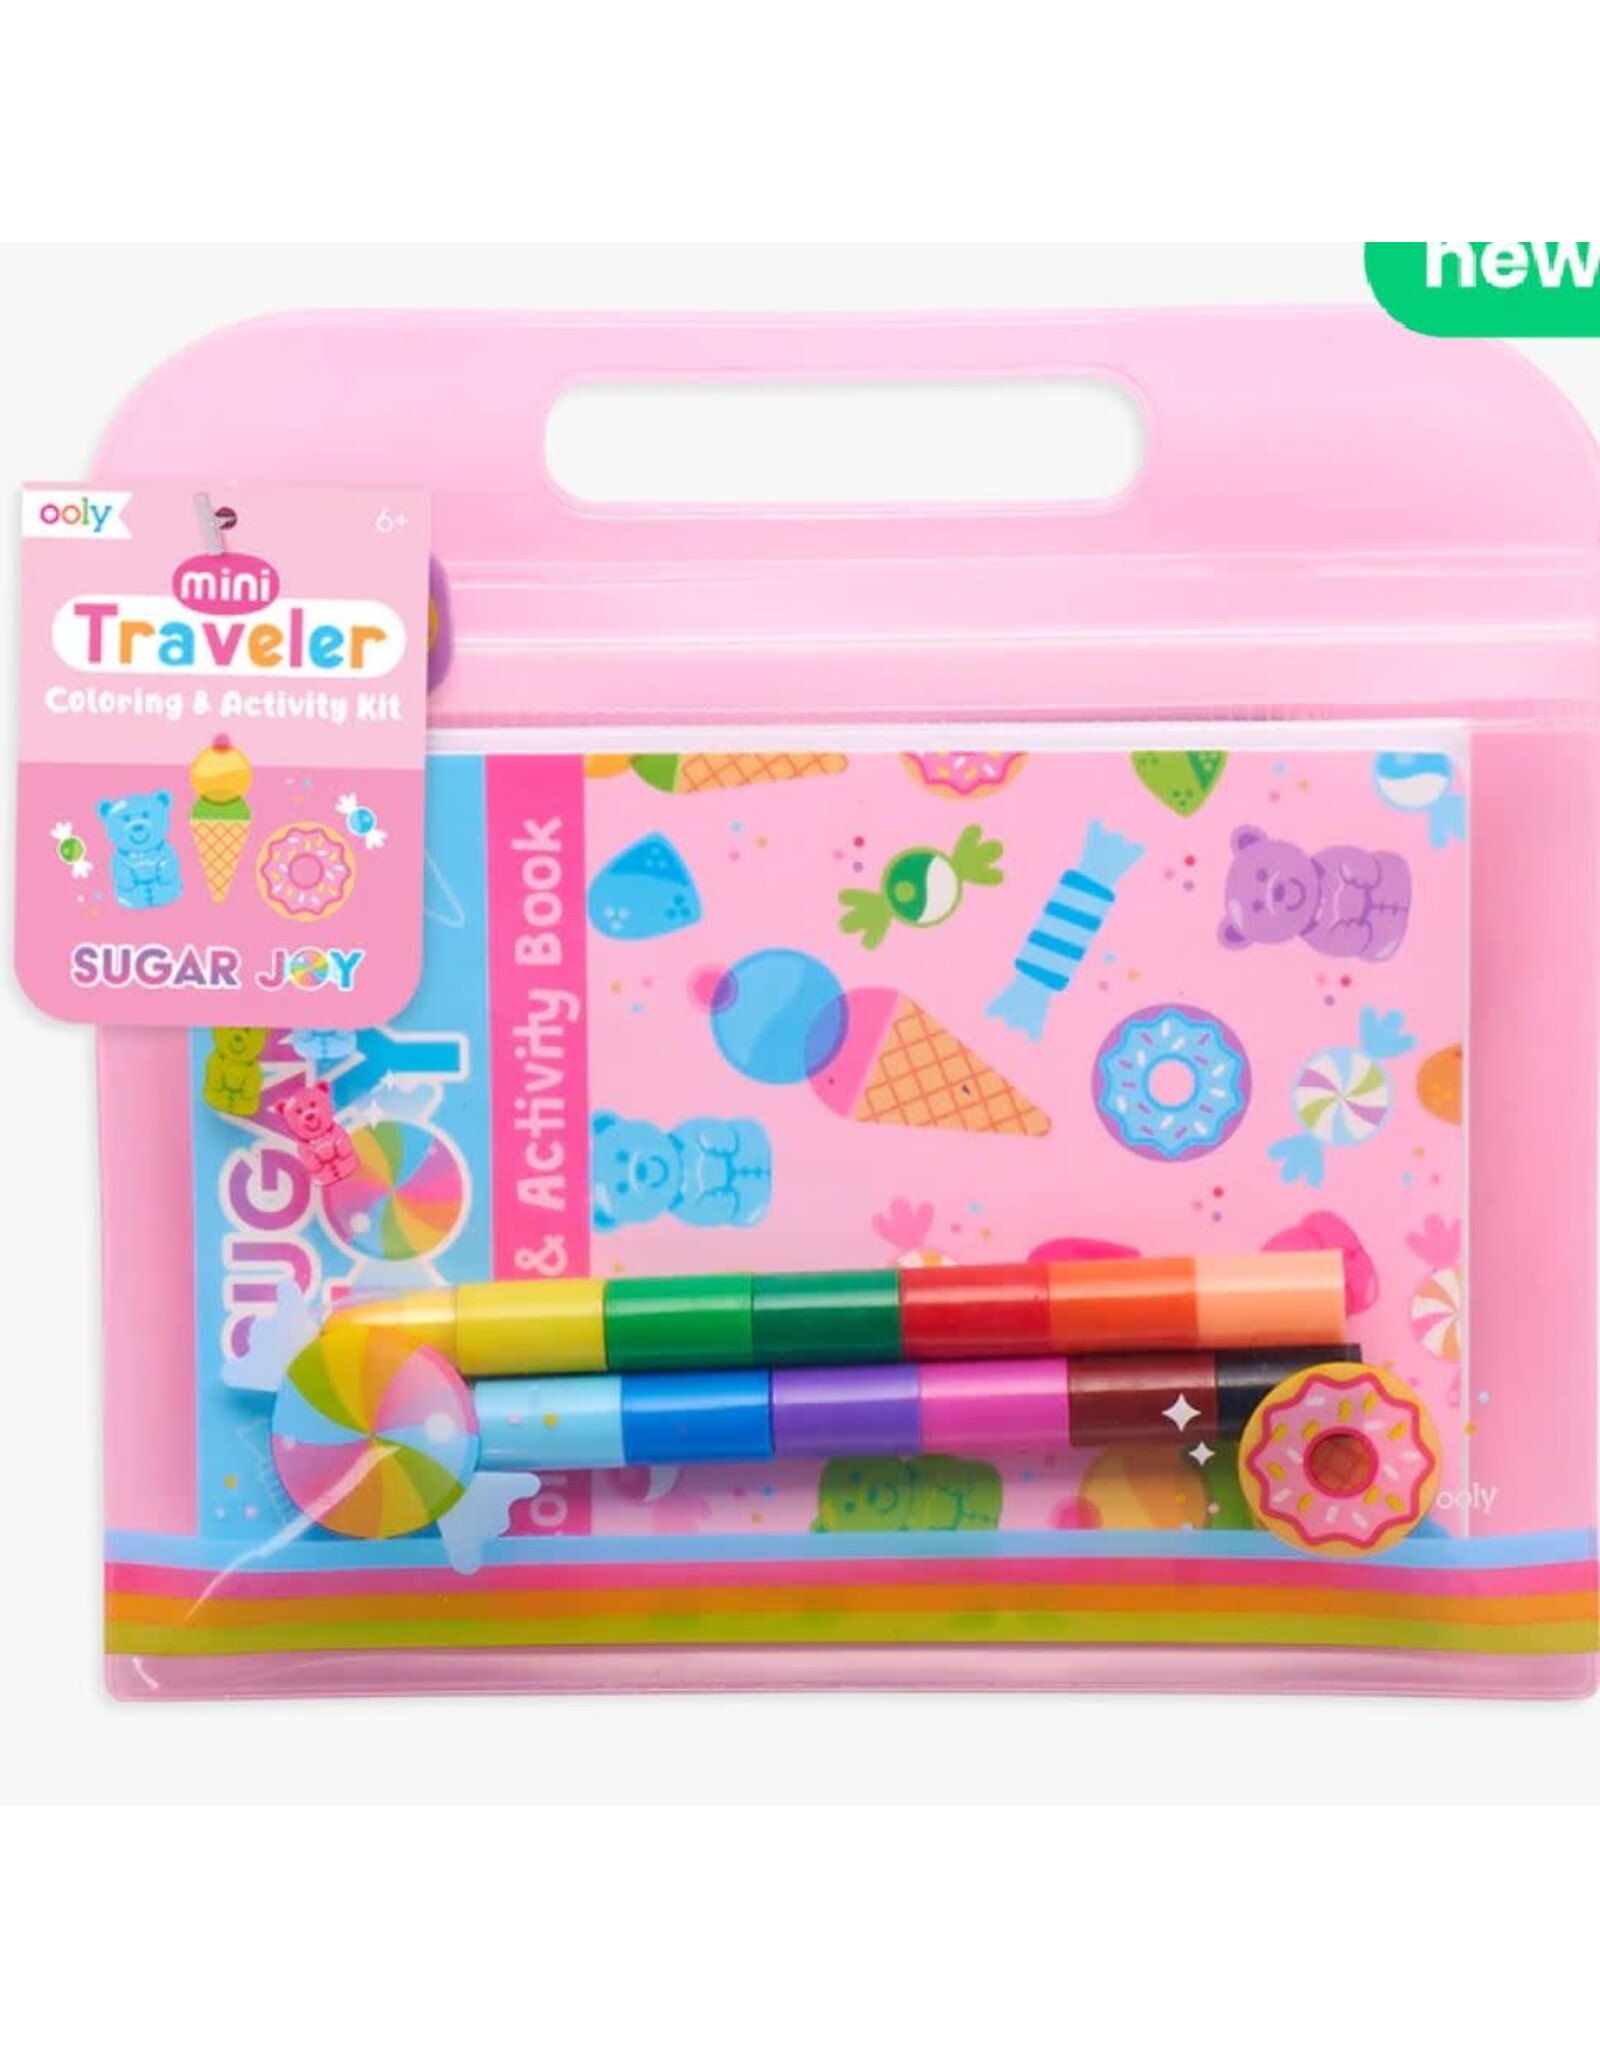 ooly Mini Traveler Coloring & Activity Kit Sugar Joy